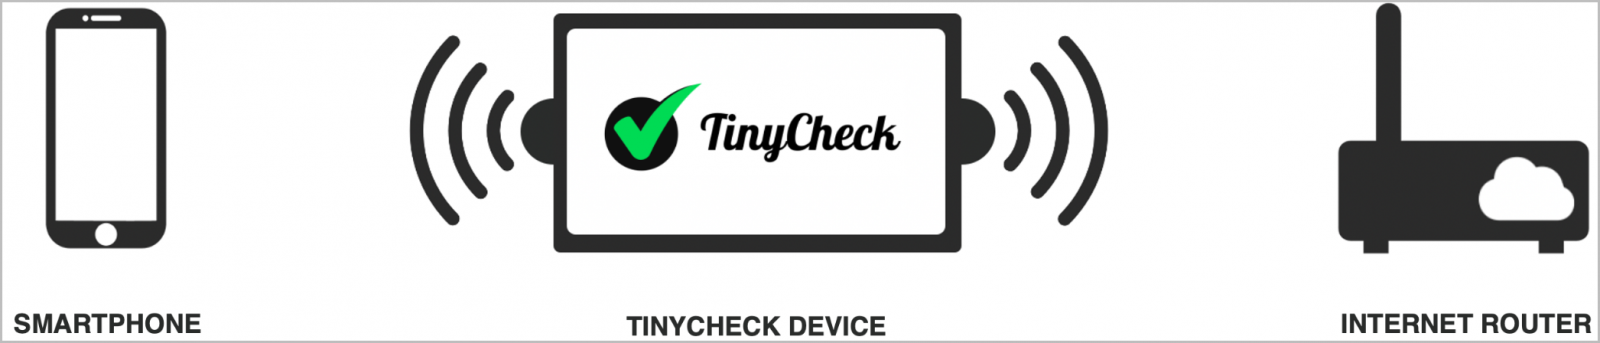 TinyCheck functional diagram